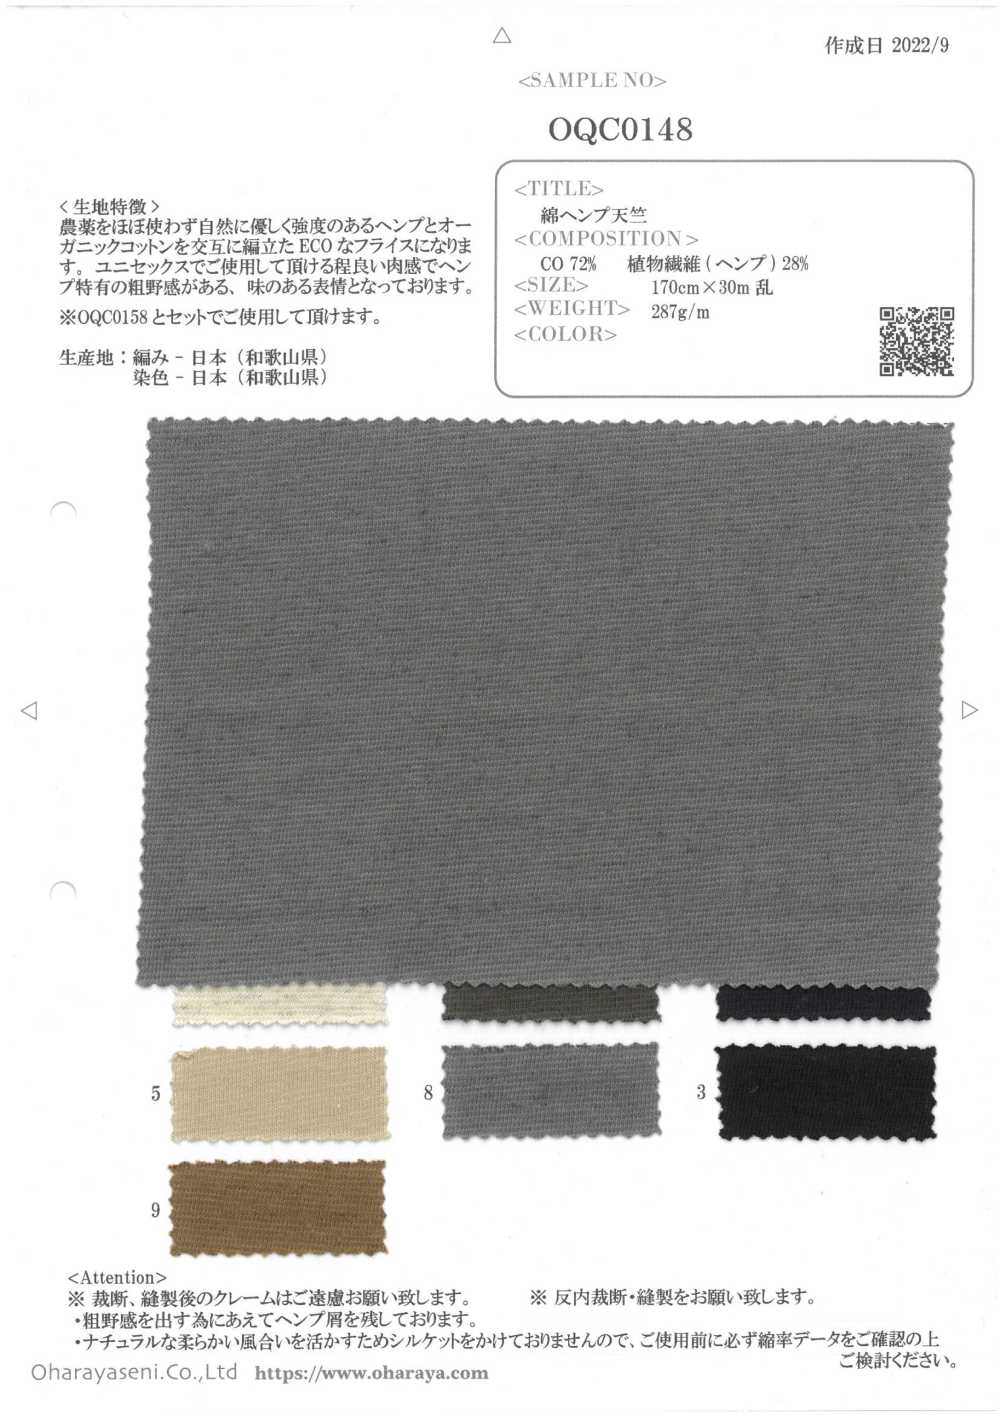 OQC0148 Jersey De Cáñamo De Algodón[Fabrica Textil] Oharayaseni